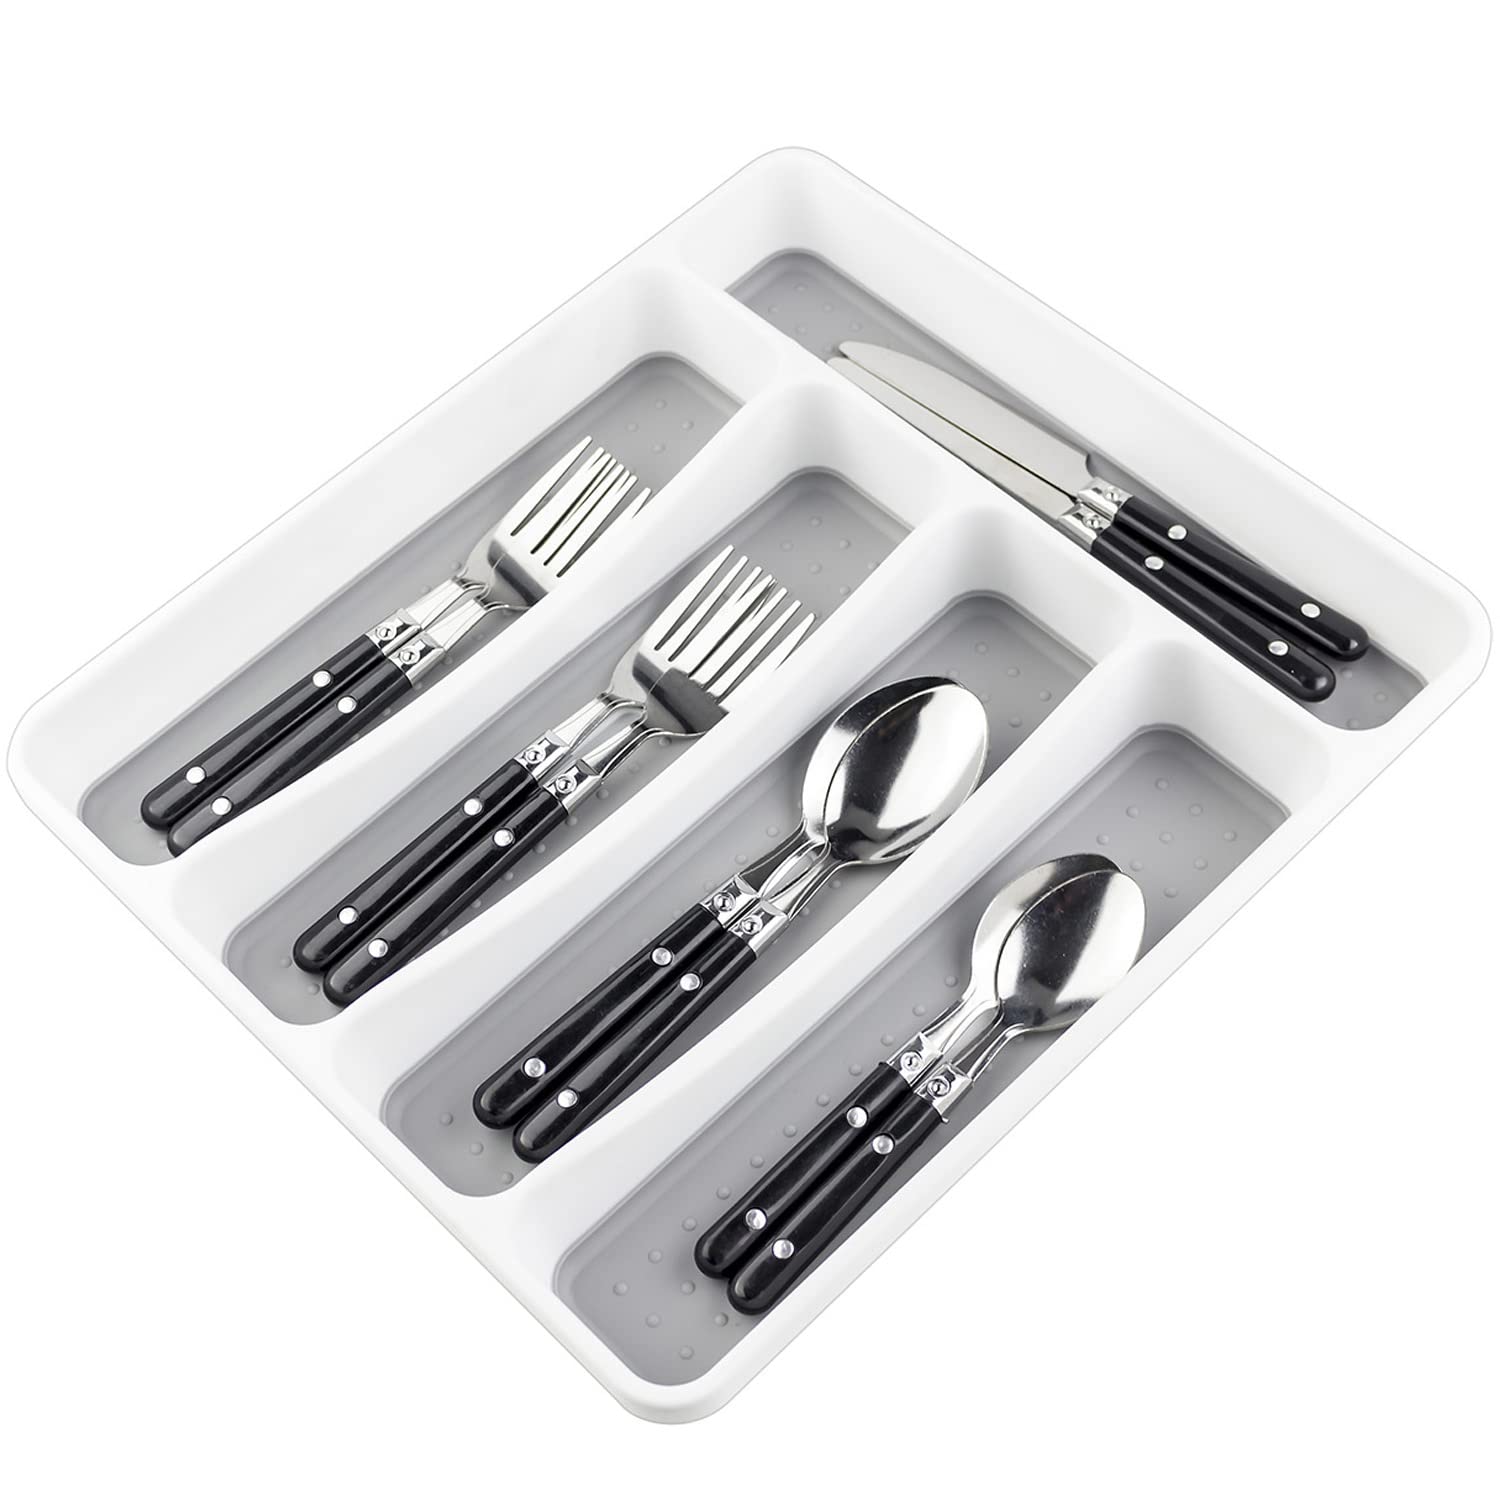 LeMuna Silverware Tray for Drawer, Plastic Cutlery Tray Kitchen Drawer Organizer, 5 Compartment Flatware Cutlery Organizer, Soft-Grip Lining and Non-Slip Rubber Feet